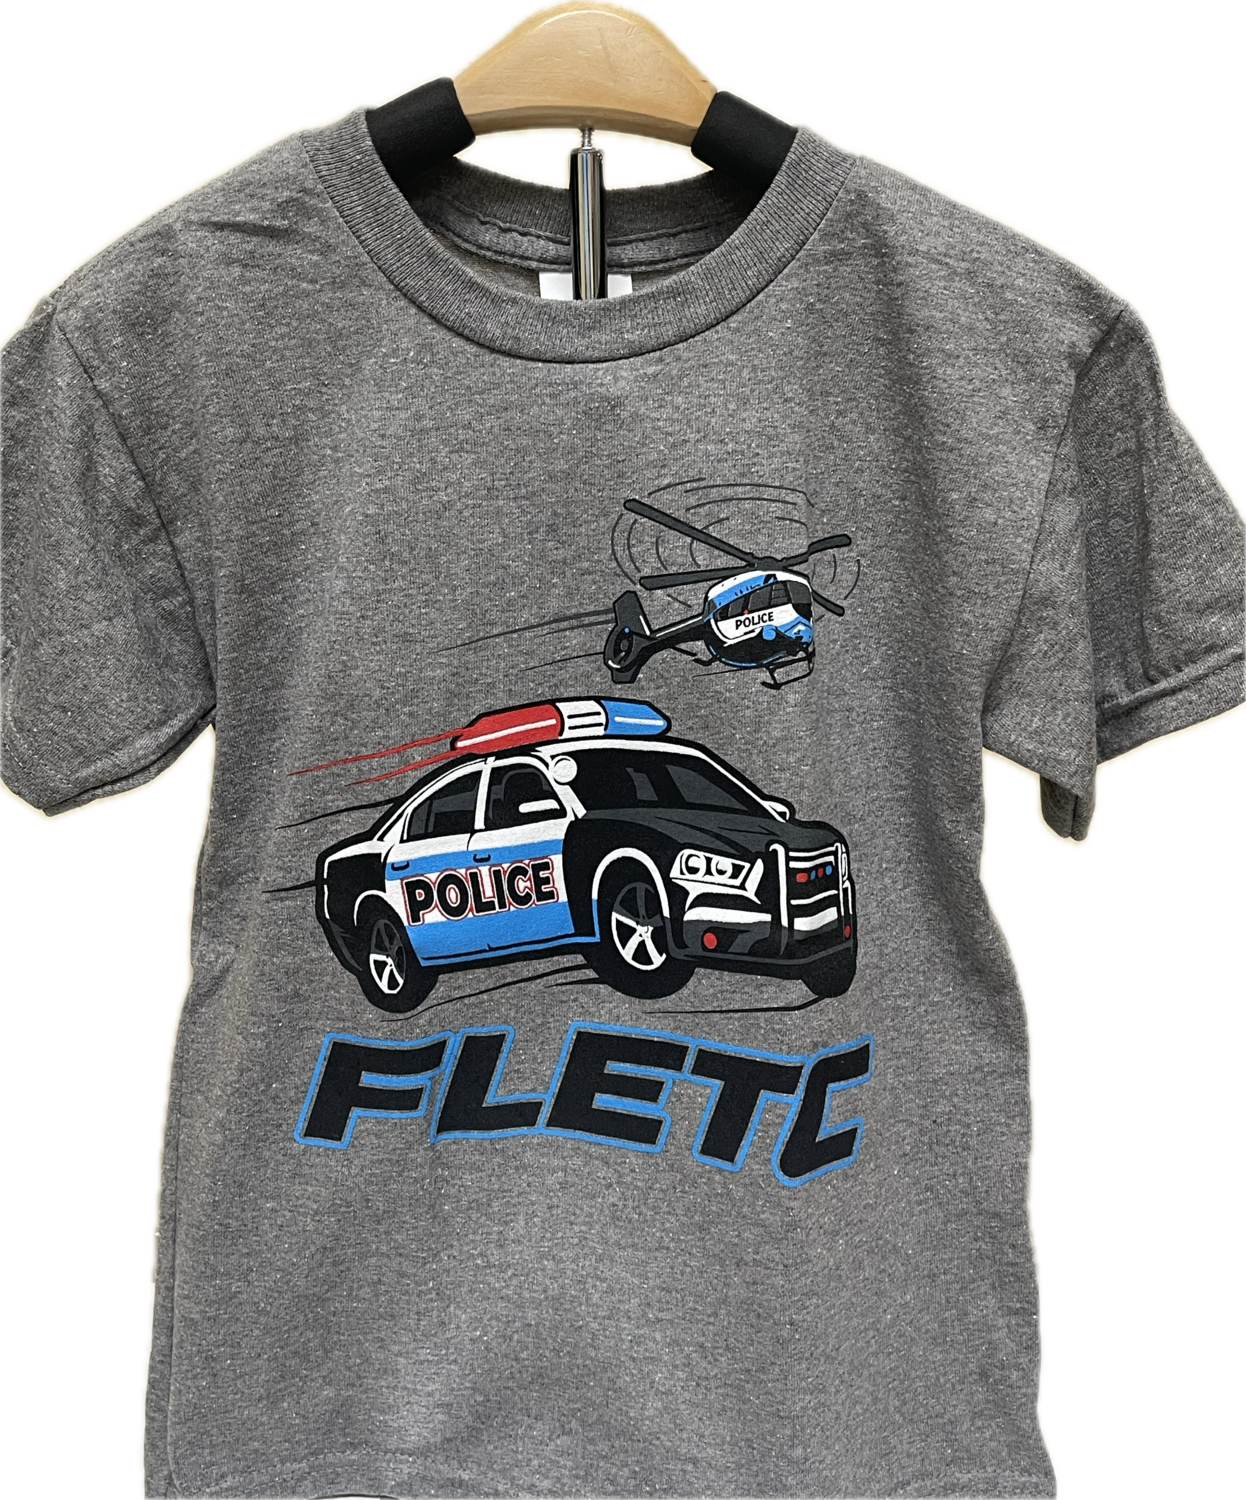 YTH FLETC POLICE/HELICOPTER TEE